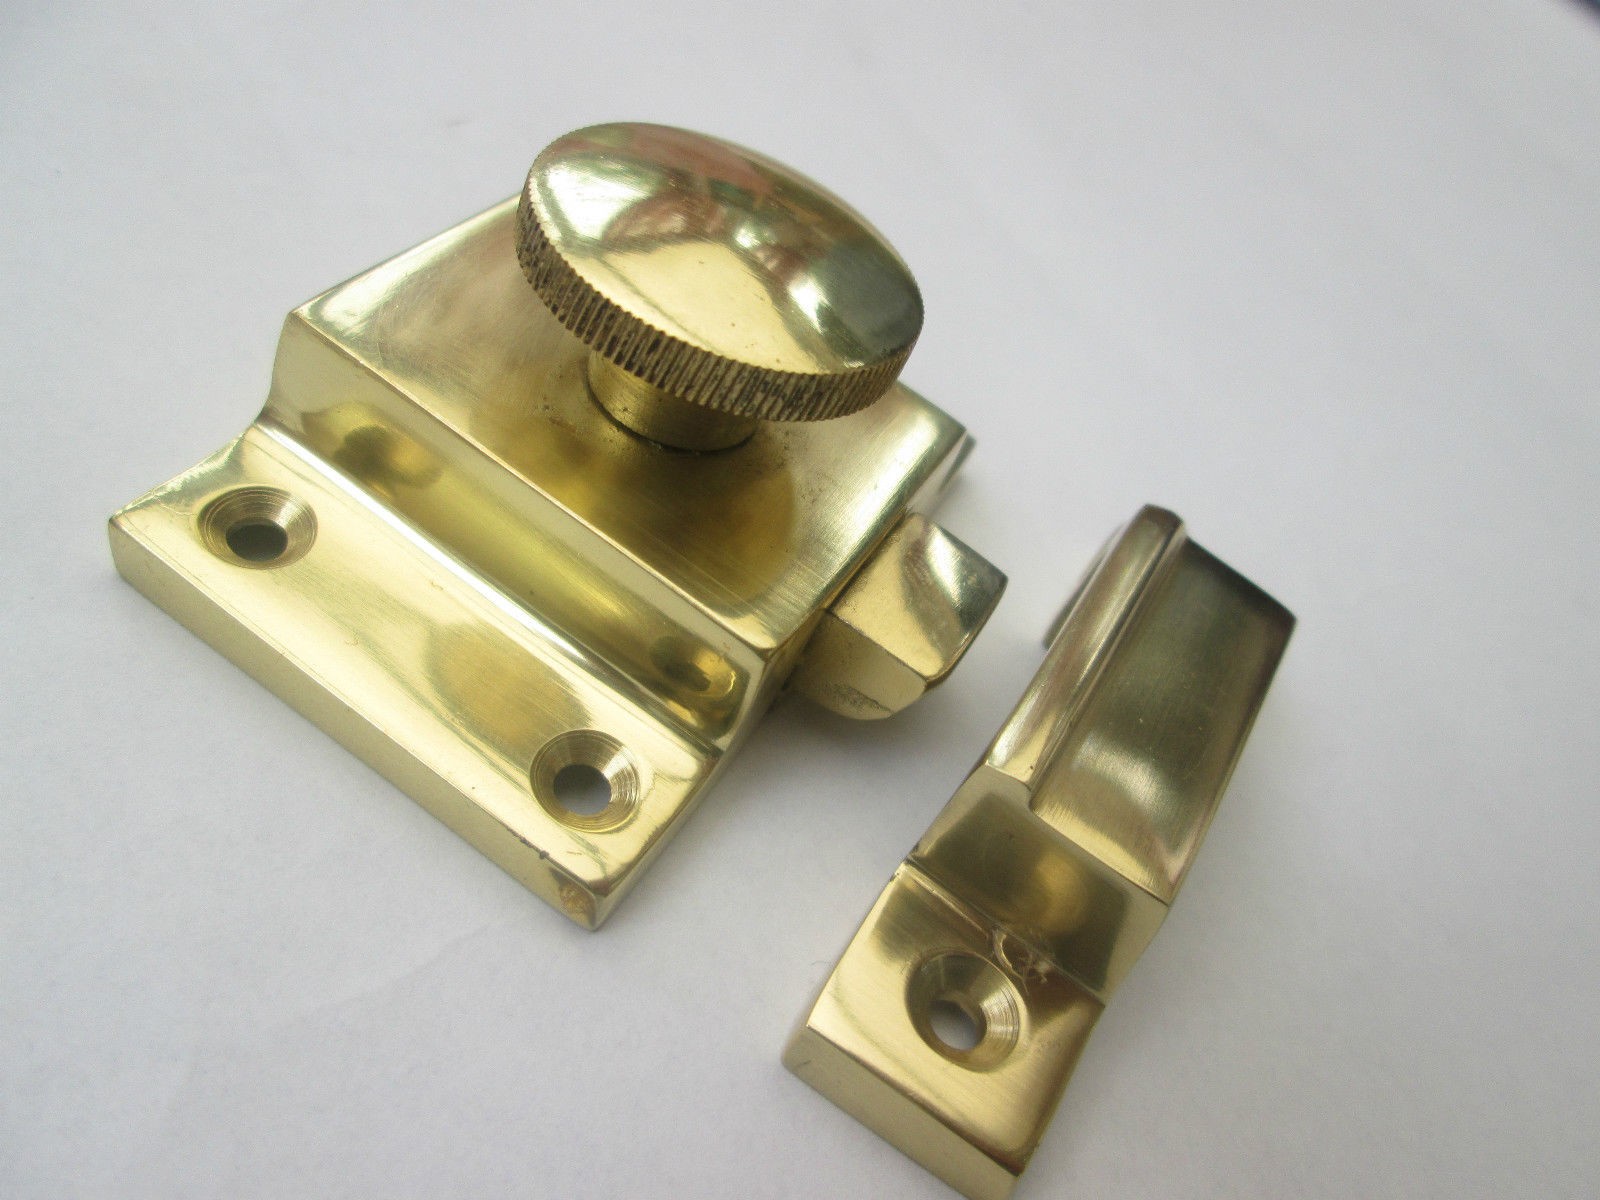 Cabinet Thumb Turn Latch Lock Polished Brass